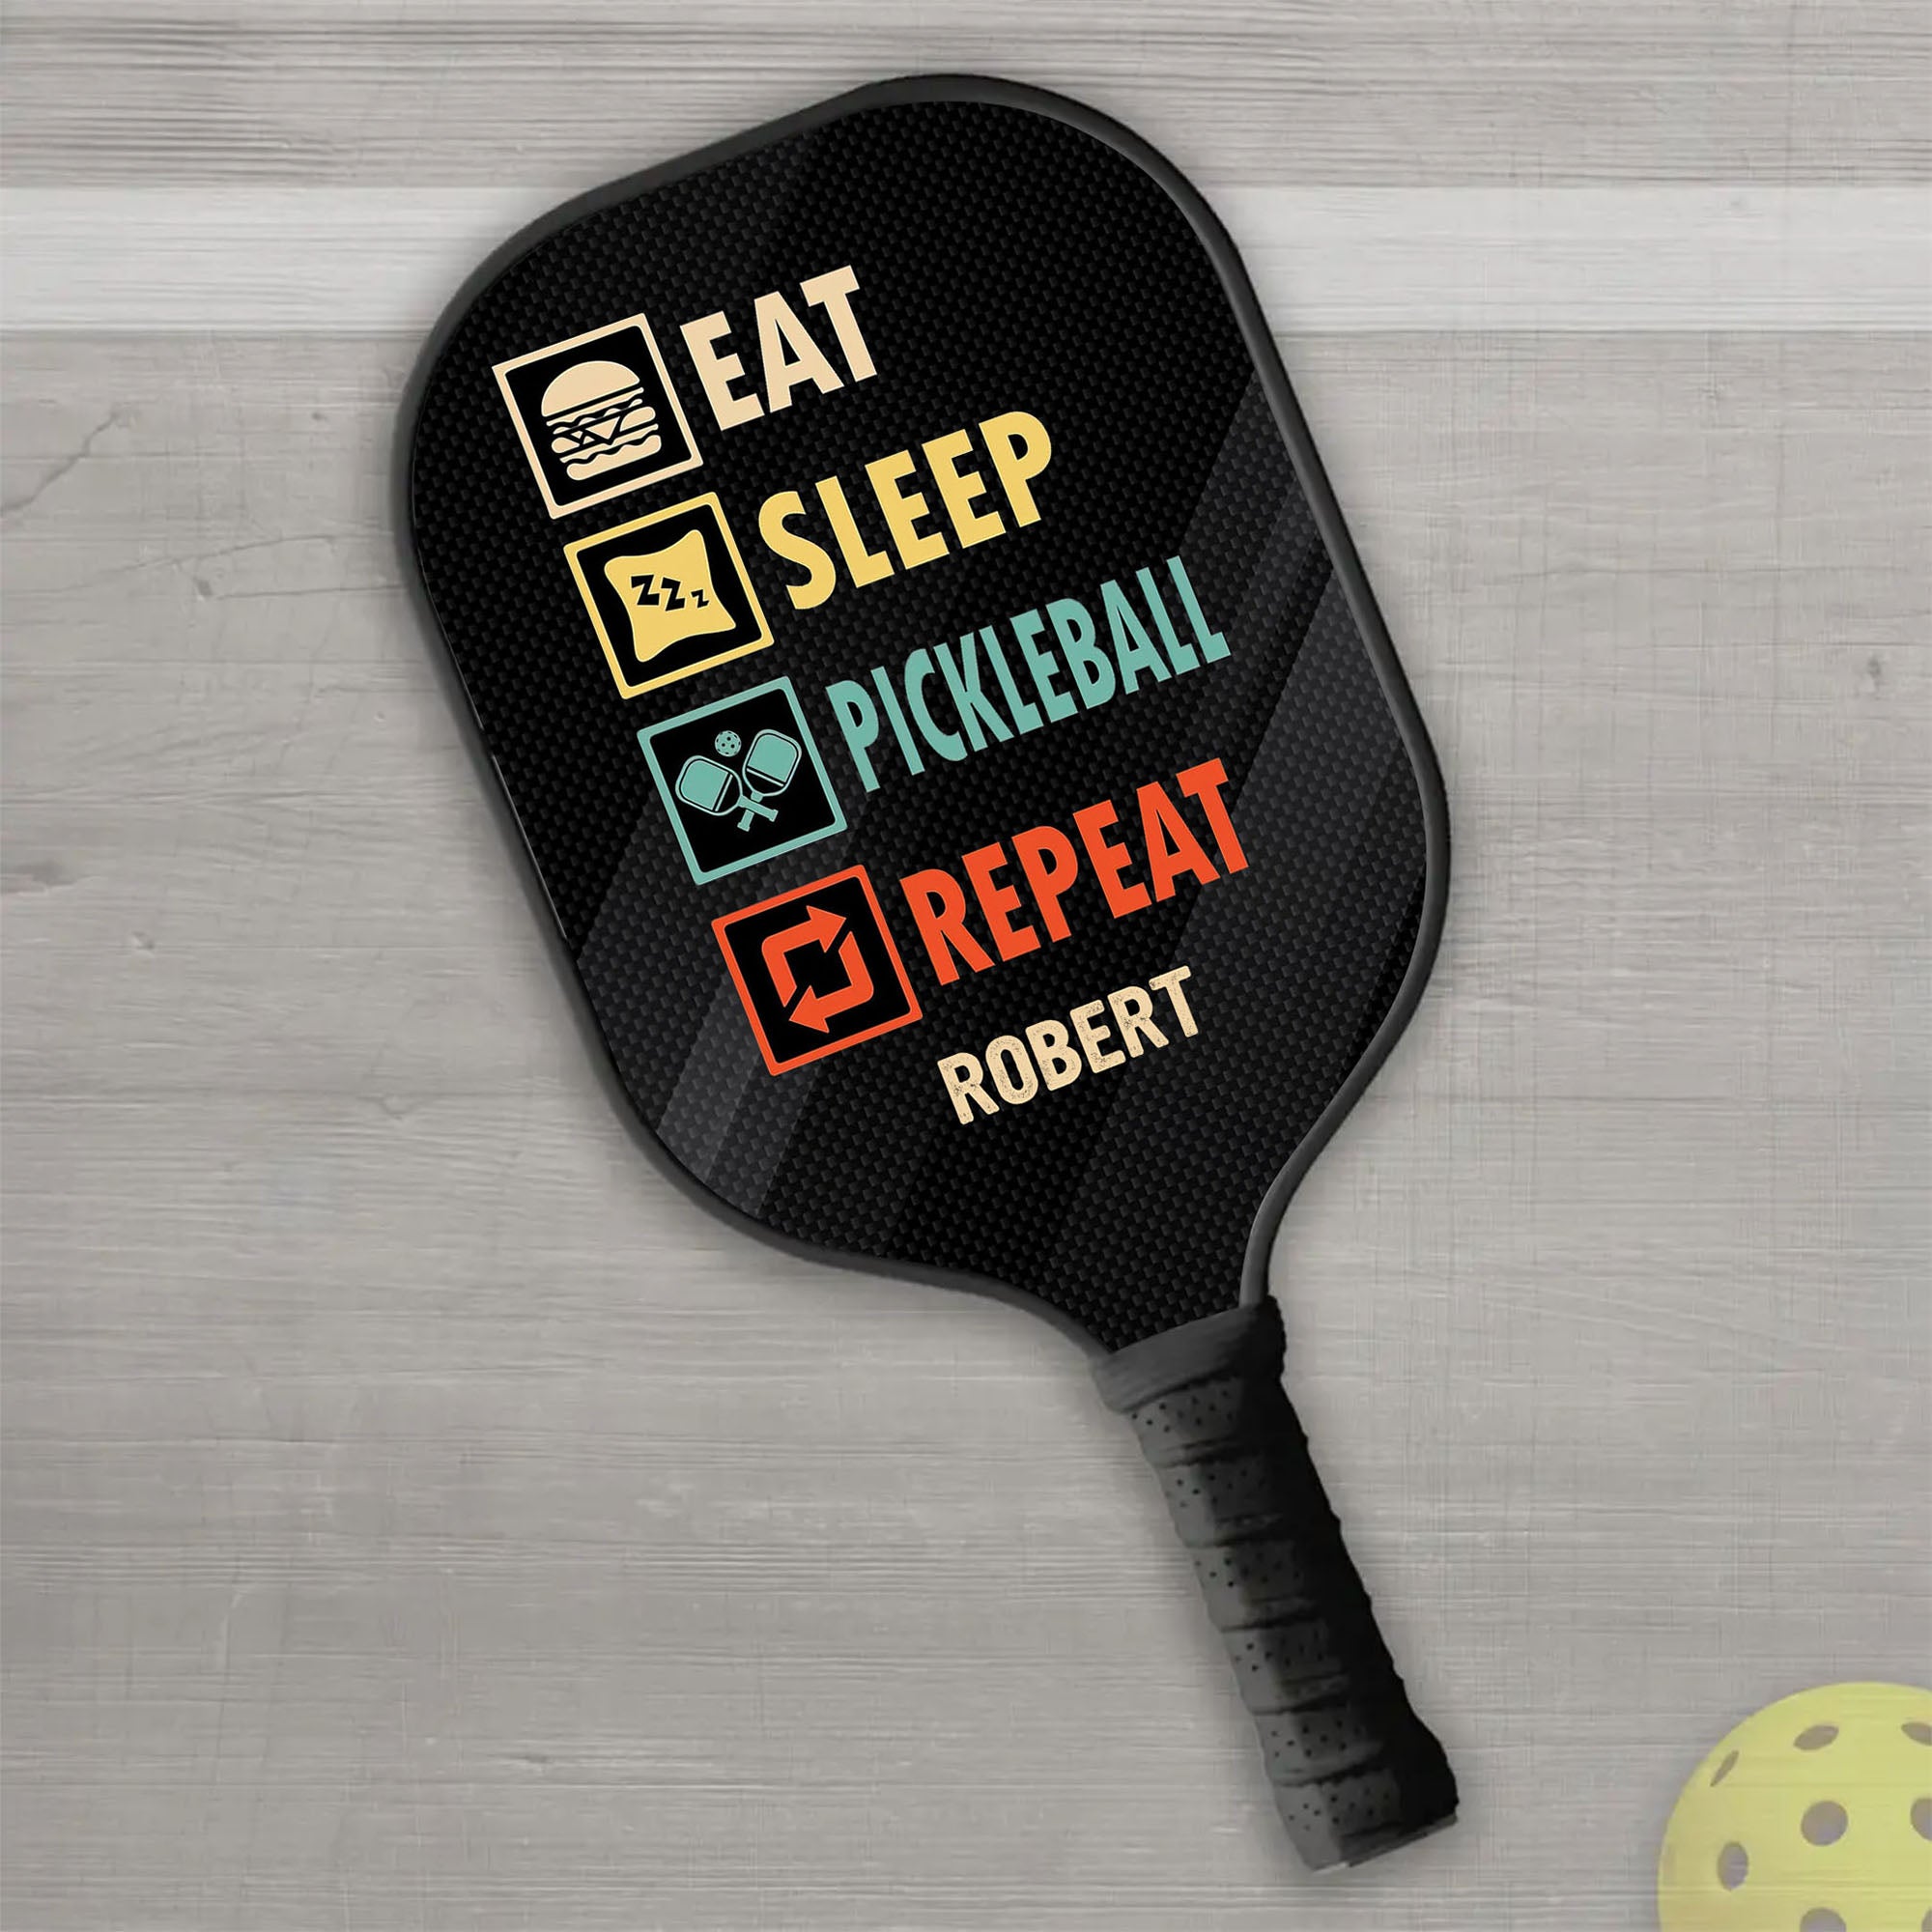 Eat Sleep Pickleball Repeat Personalized Custom Name - Pickleball Paddle